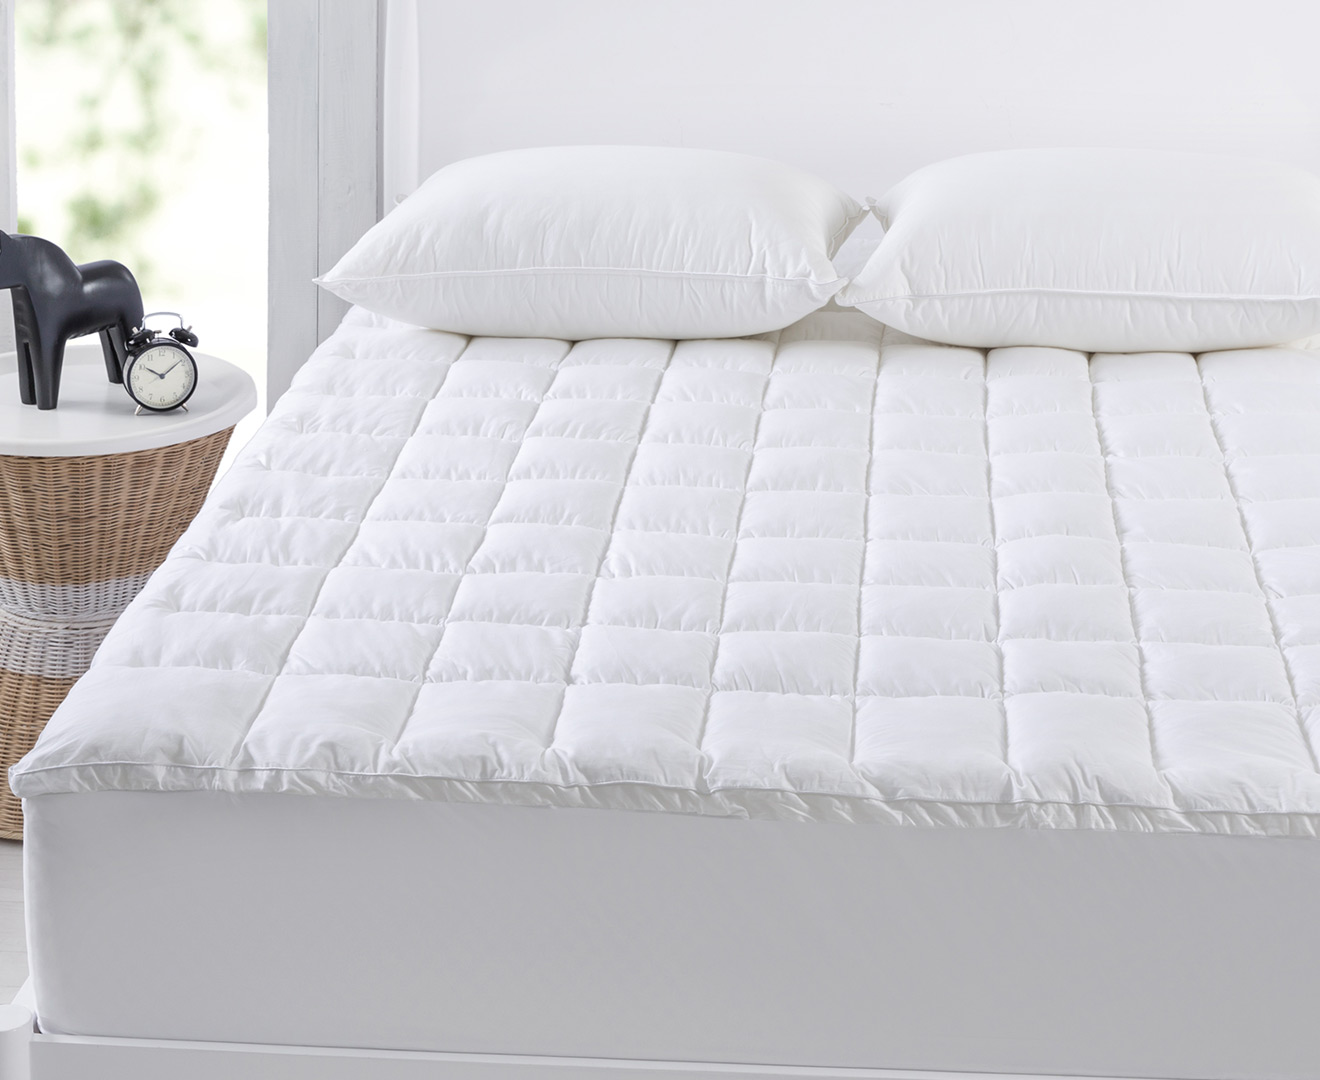 jason mattress protector review